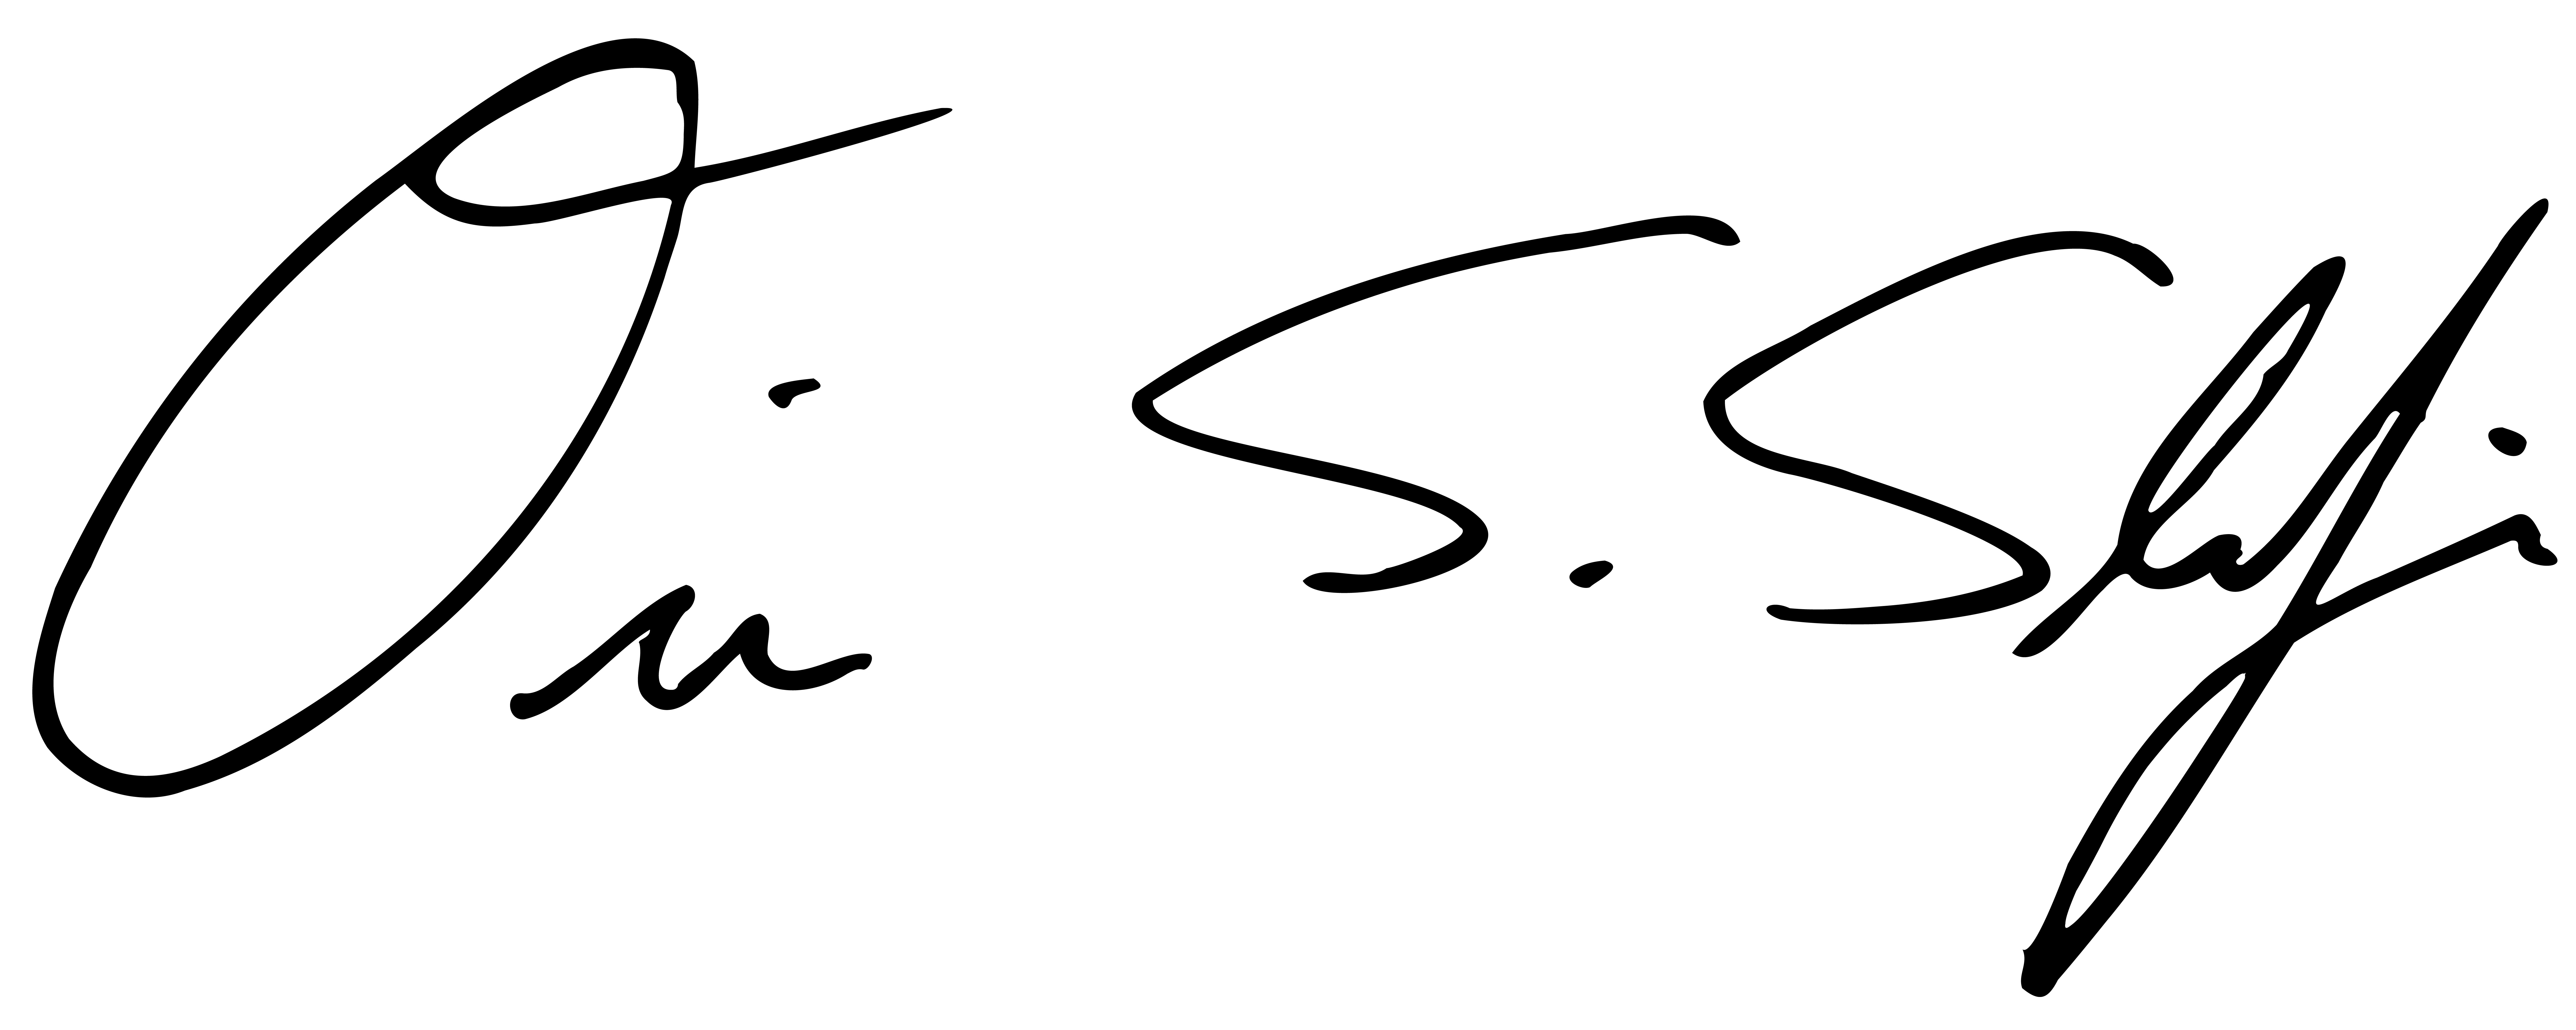 OSS Signature.jpg